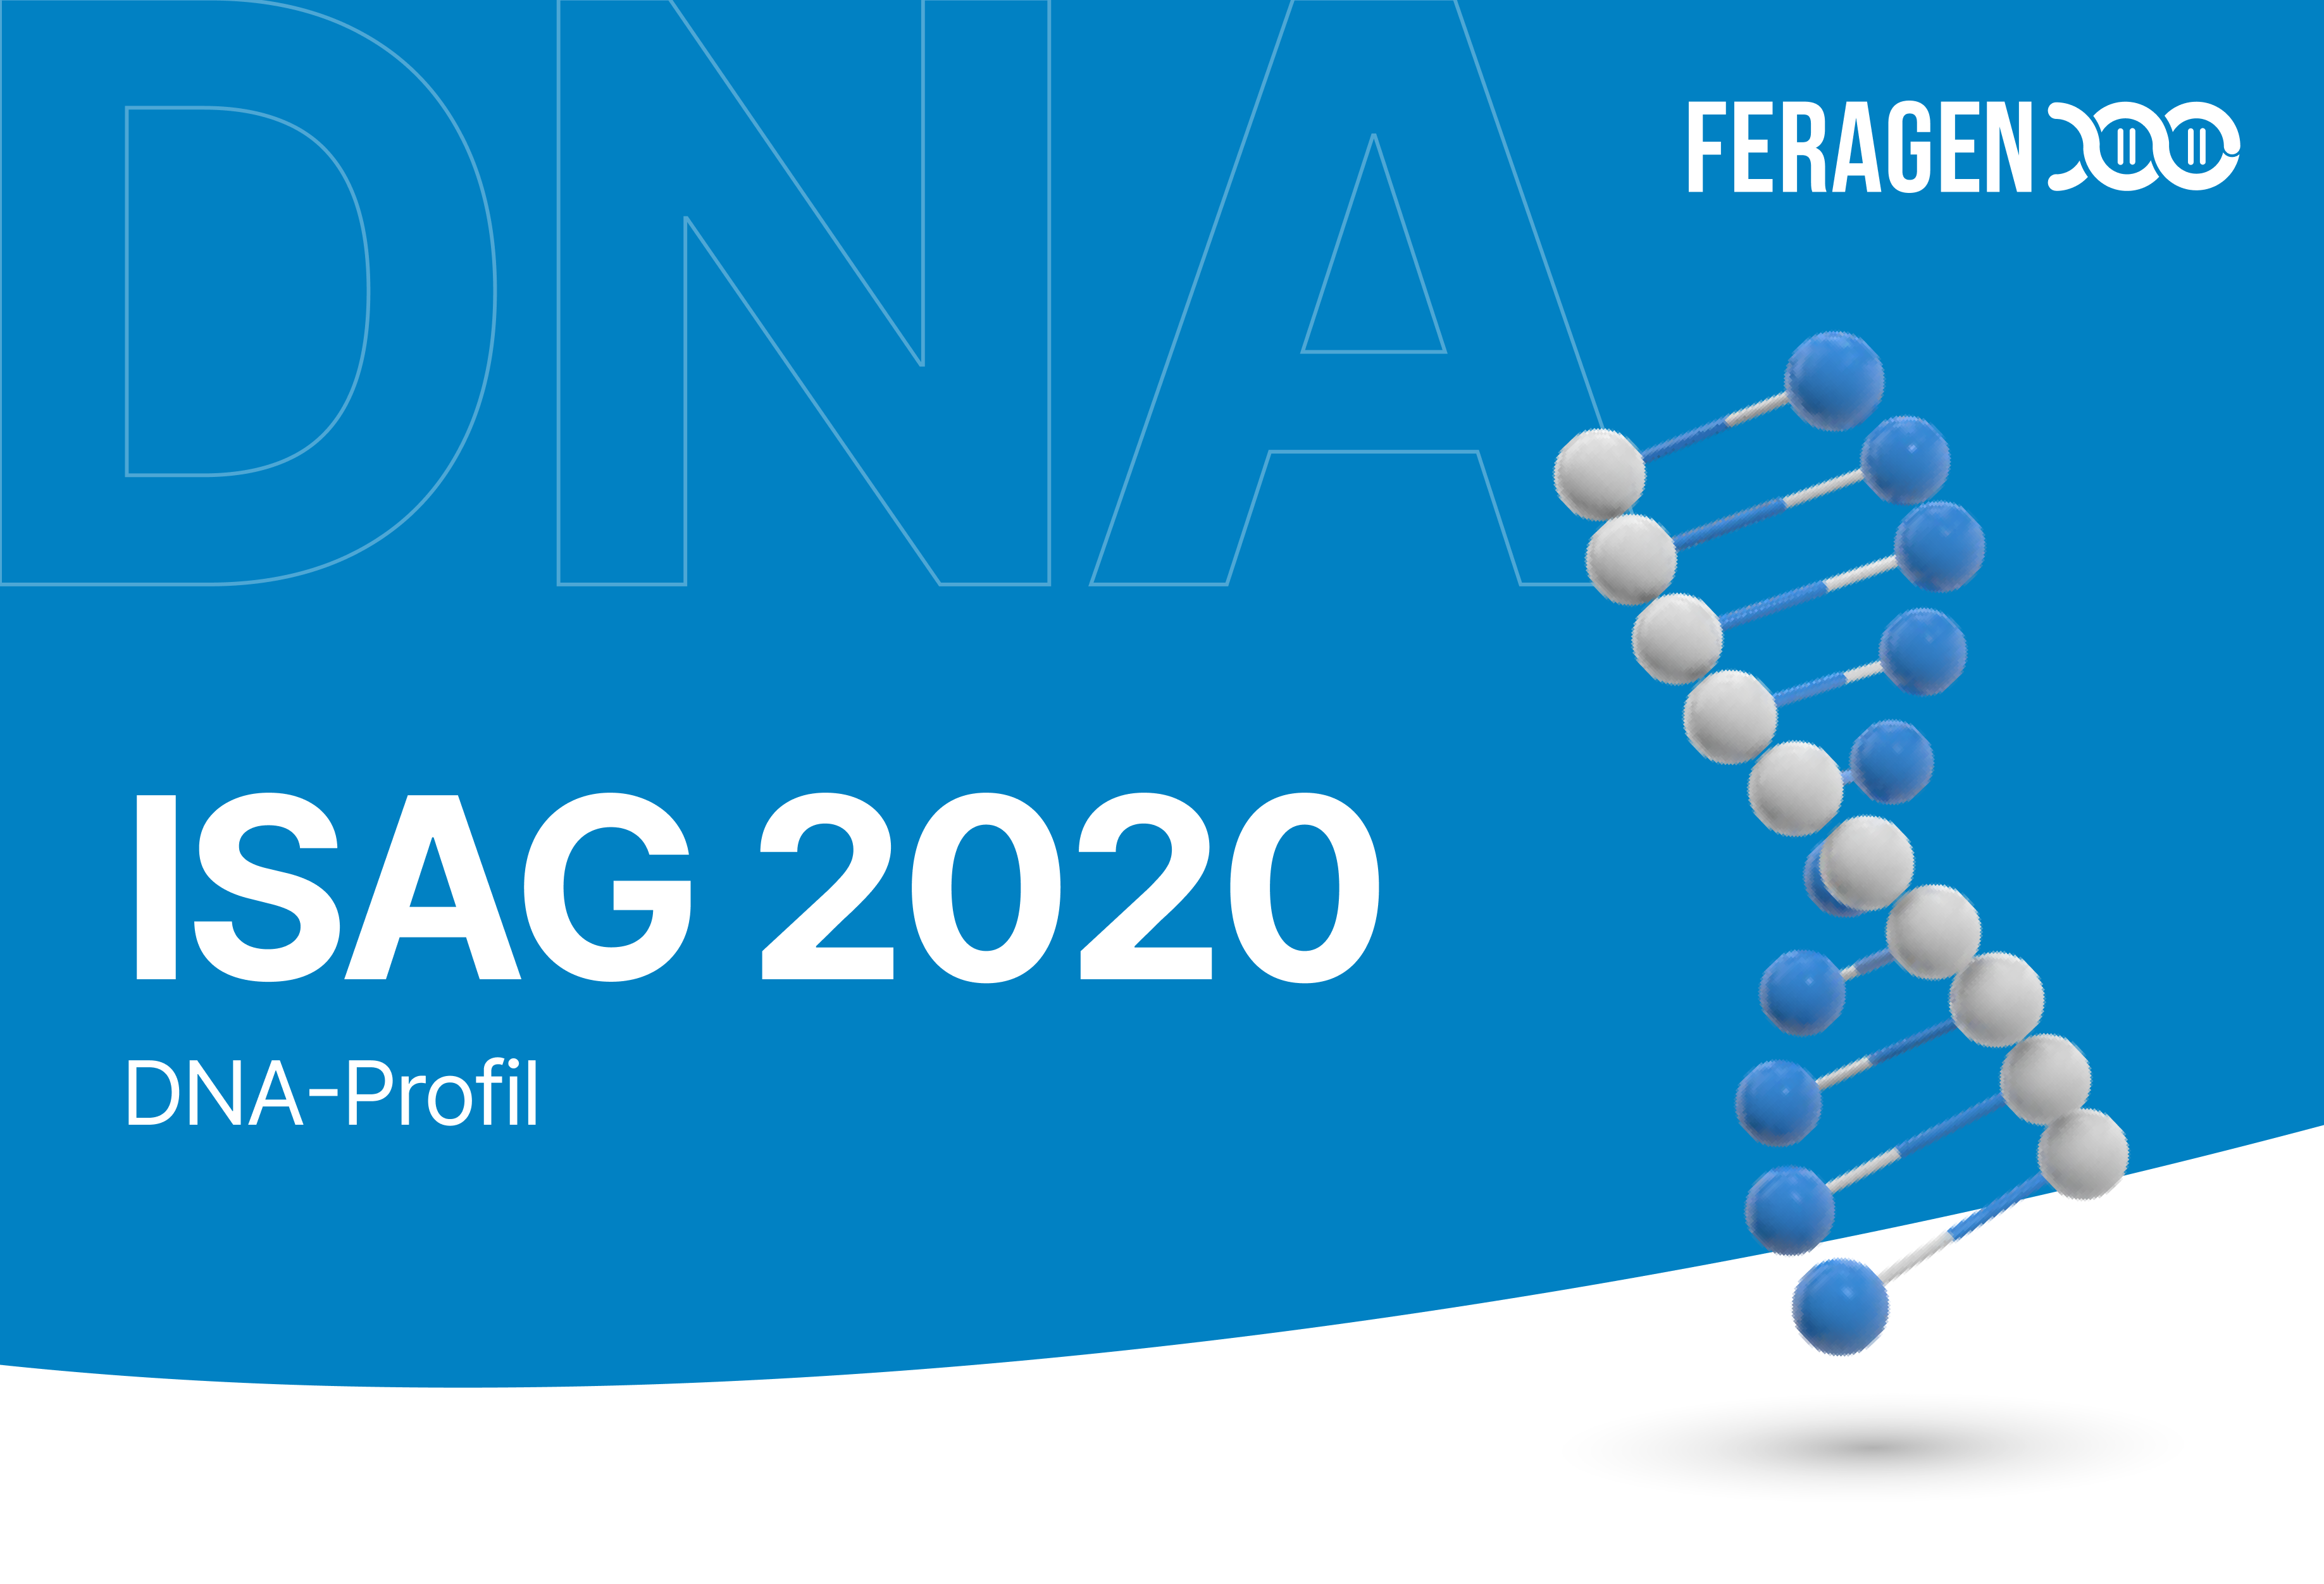 DNA profile (ISAG 2020)